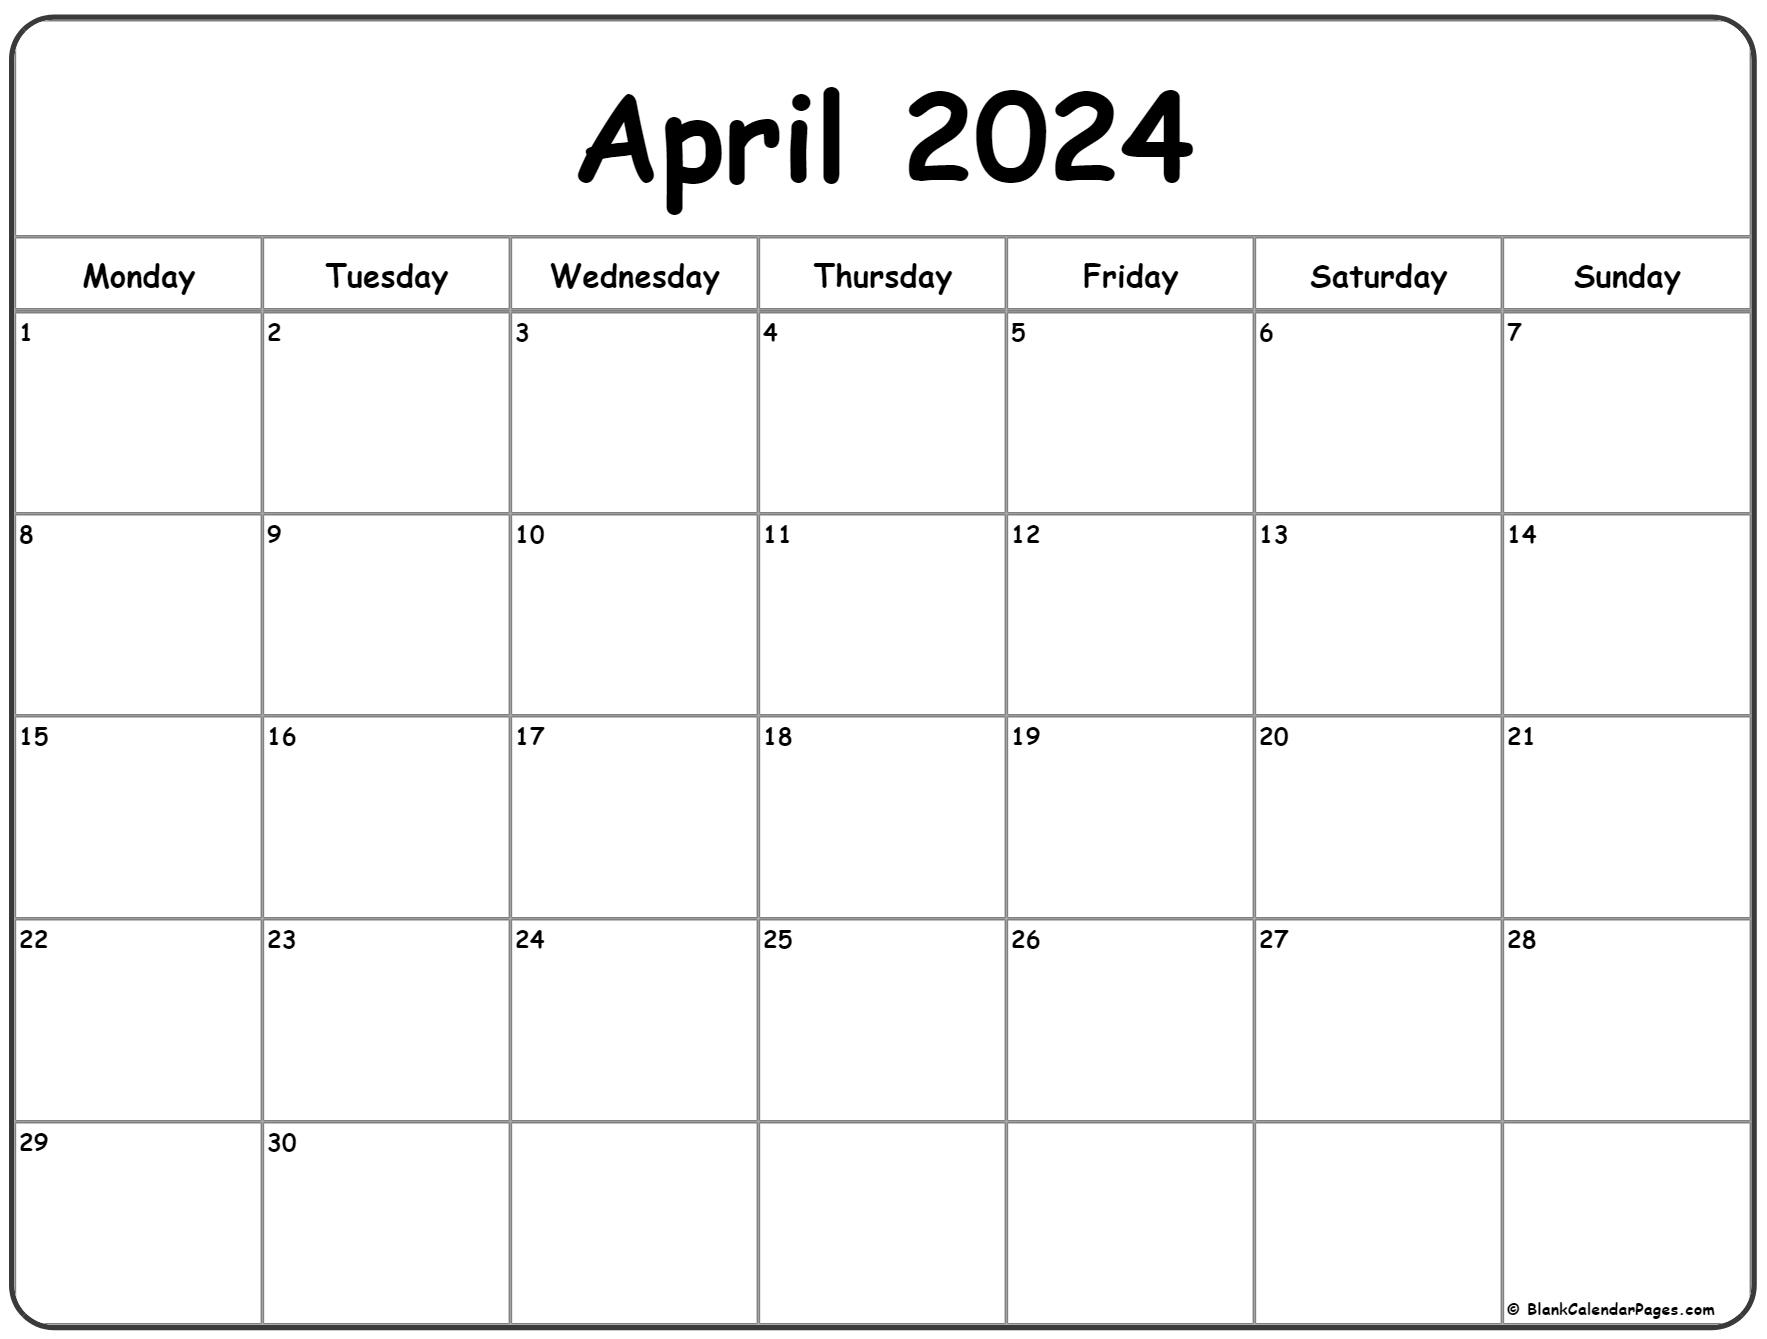 April 2024 Monday Calendar | Monday To Sunday for Blank Calendar Printable April 2024